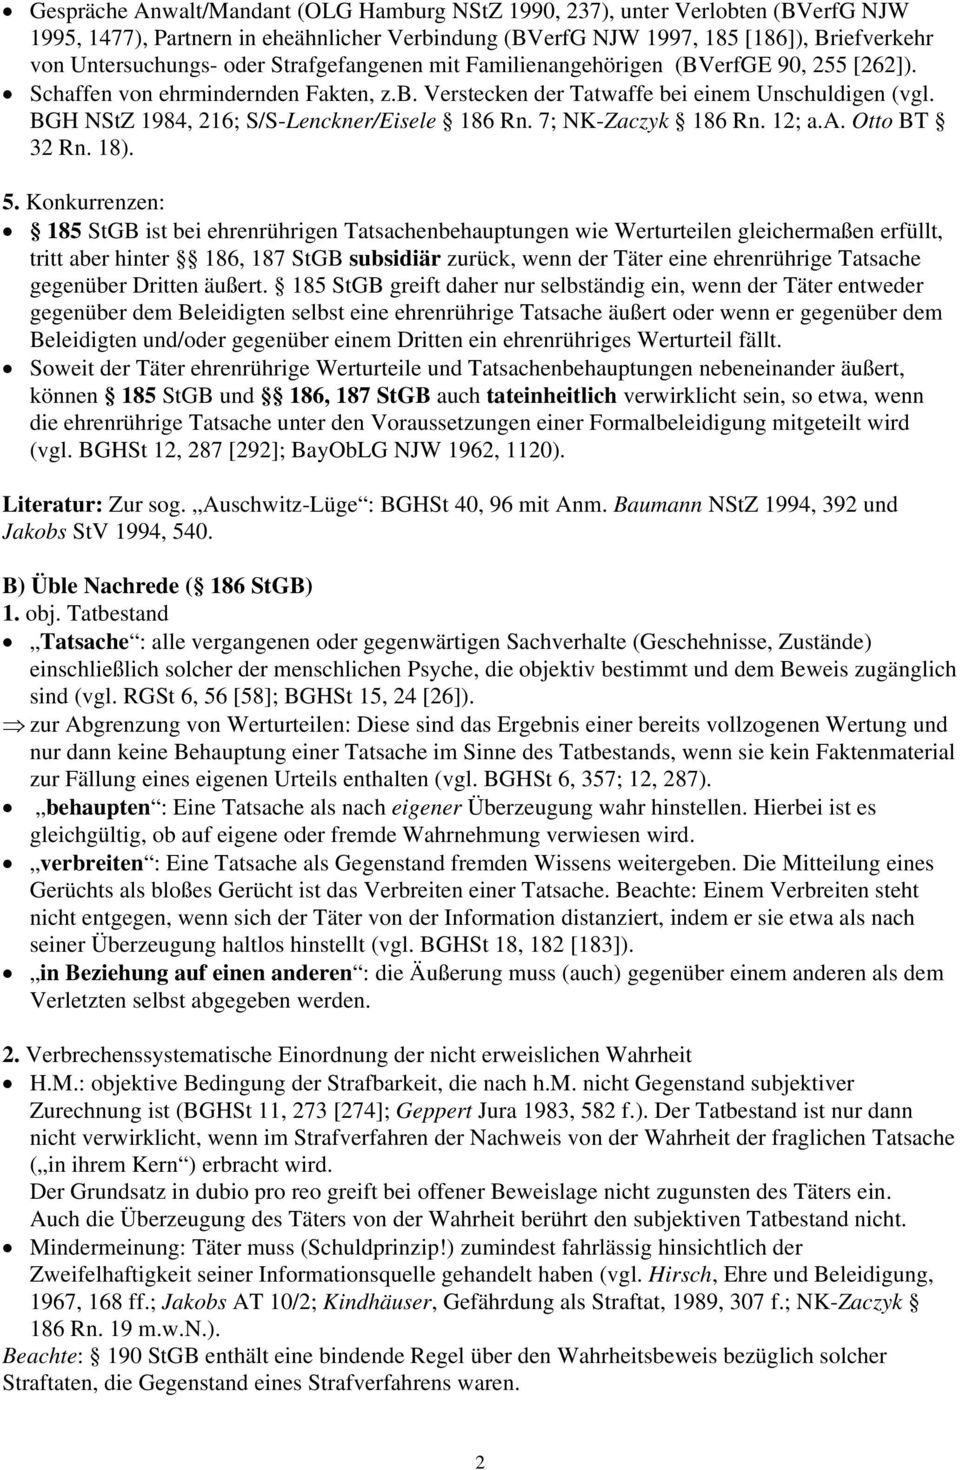 BGH NStZ 1984, 216; S/S-Lenckner/Eisele 186 Rn. 7; NK-Zaczyk 186 Rn. 12; a.a. Otto BT 32 Rn. 18). 5.